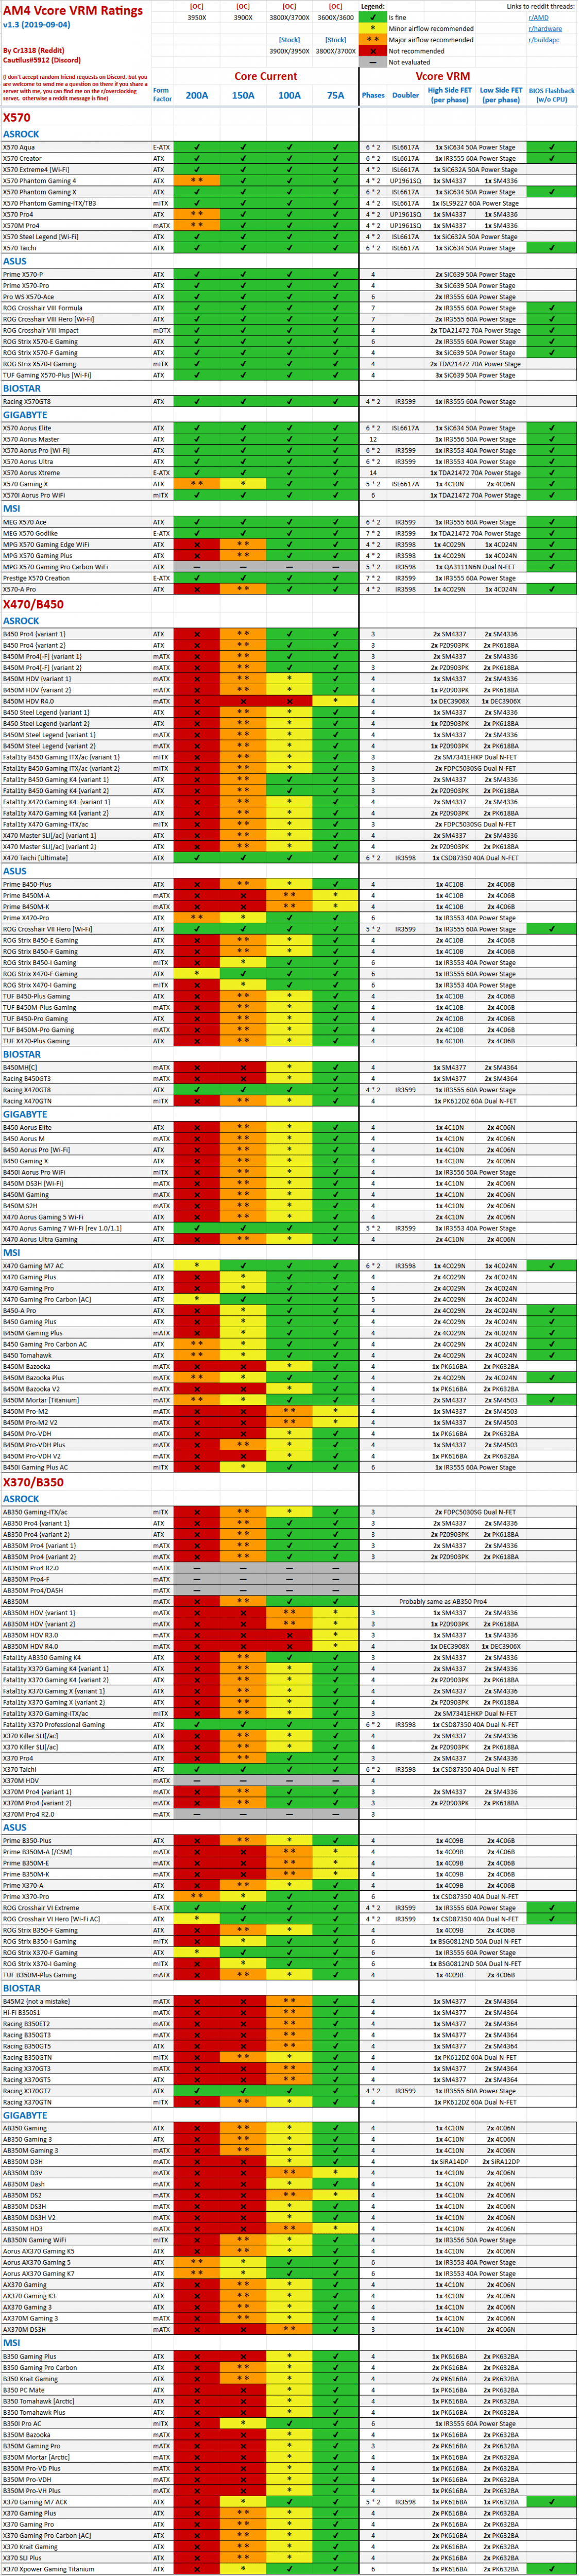 AM4 Motherboard VRM List(Comparing).png